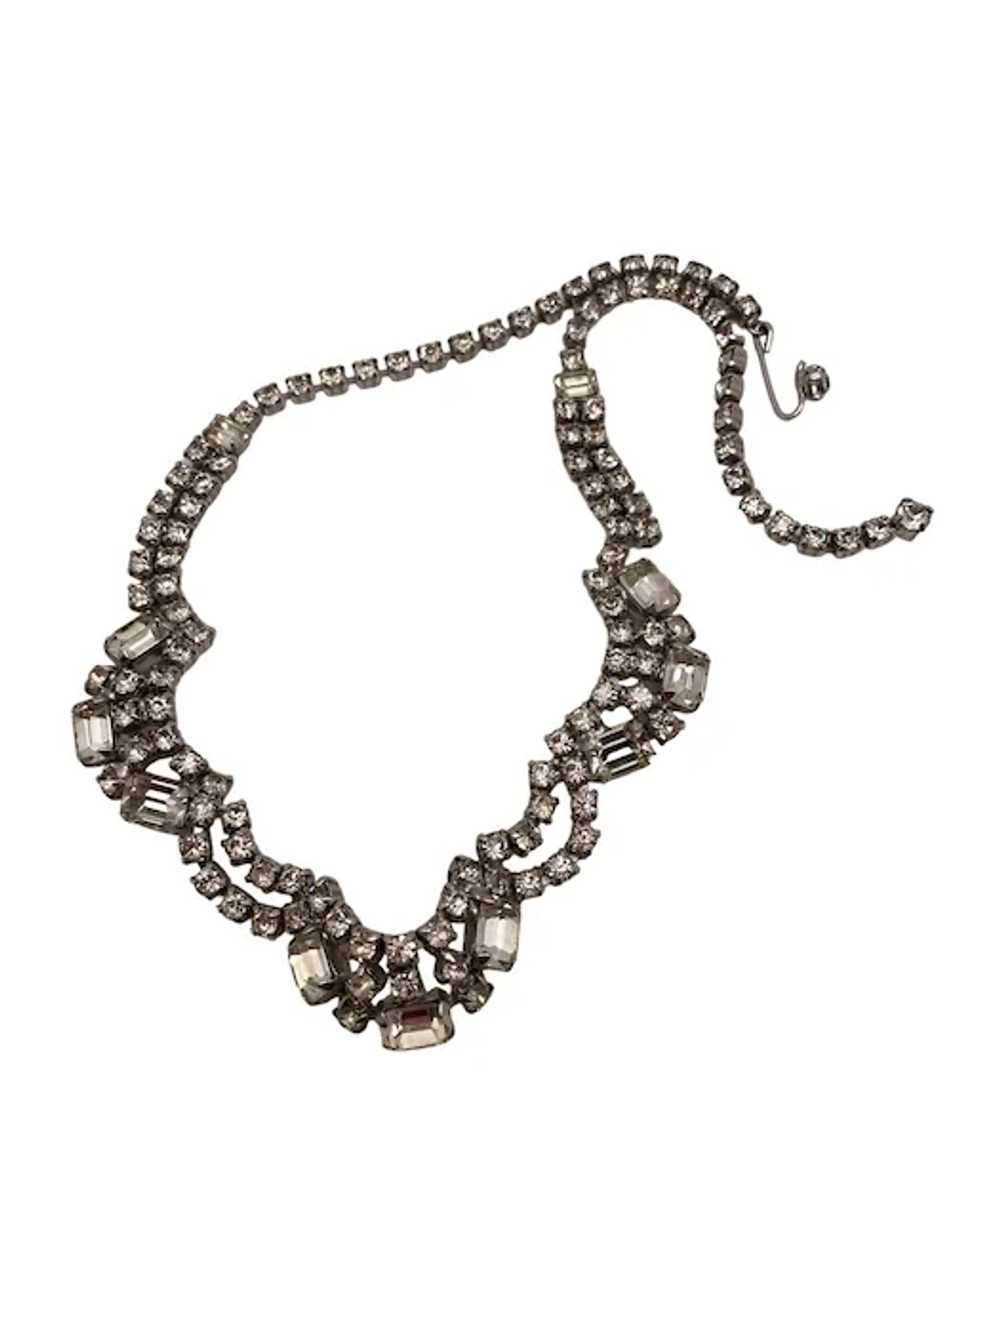 Vintage Mid-Century Rhinestone Choker Necklace - image 6